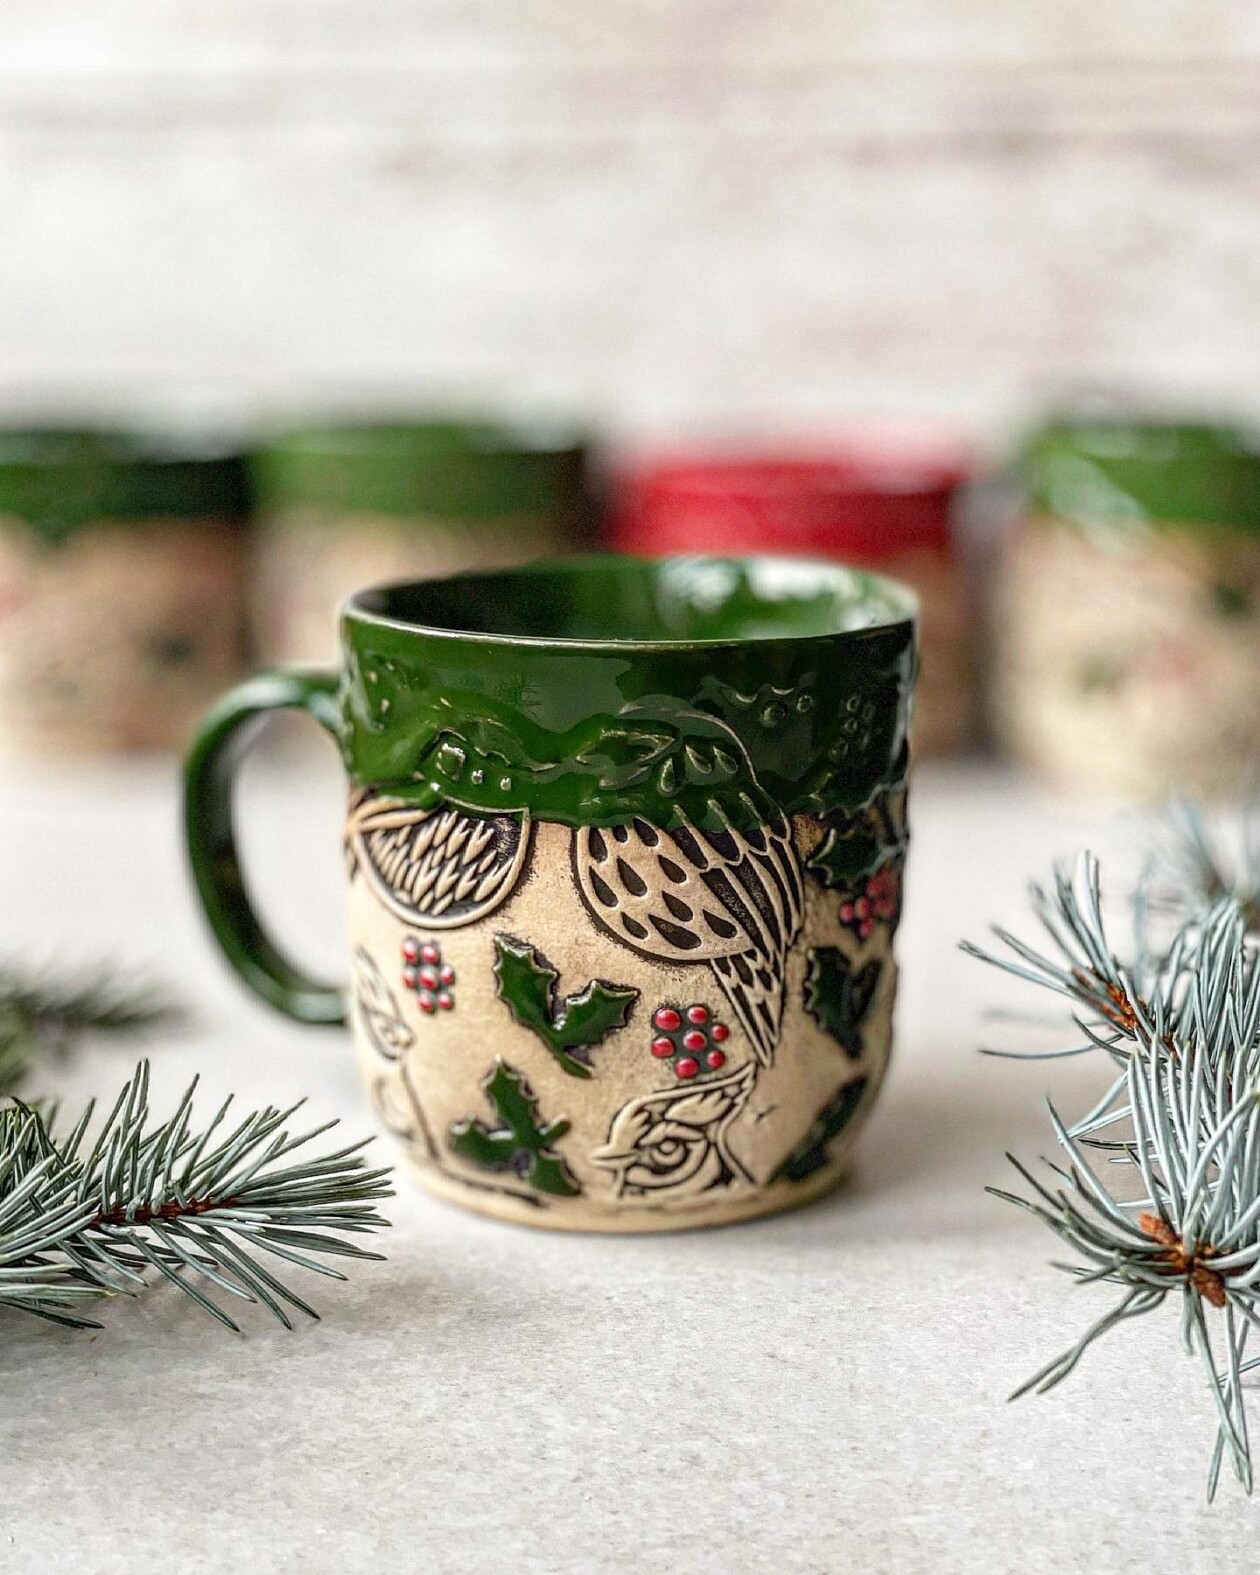 Ceramics With Vintage Motifs By Joanna Dylowska (8)